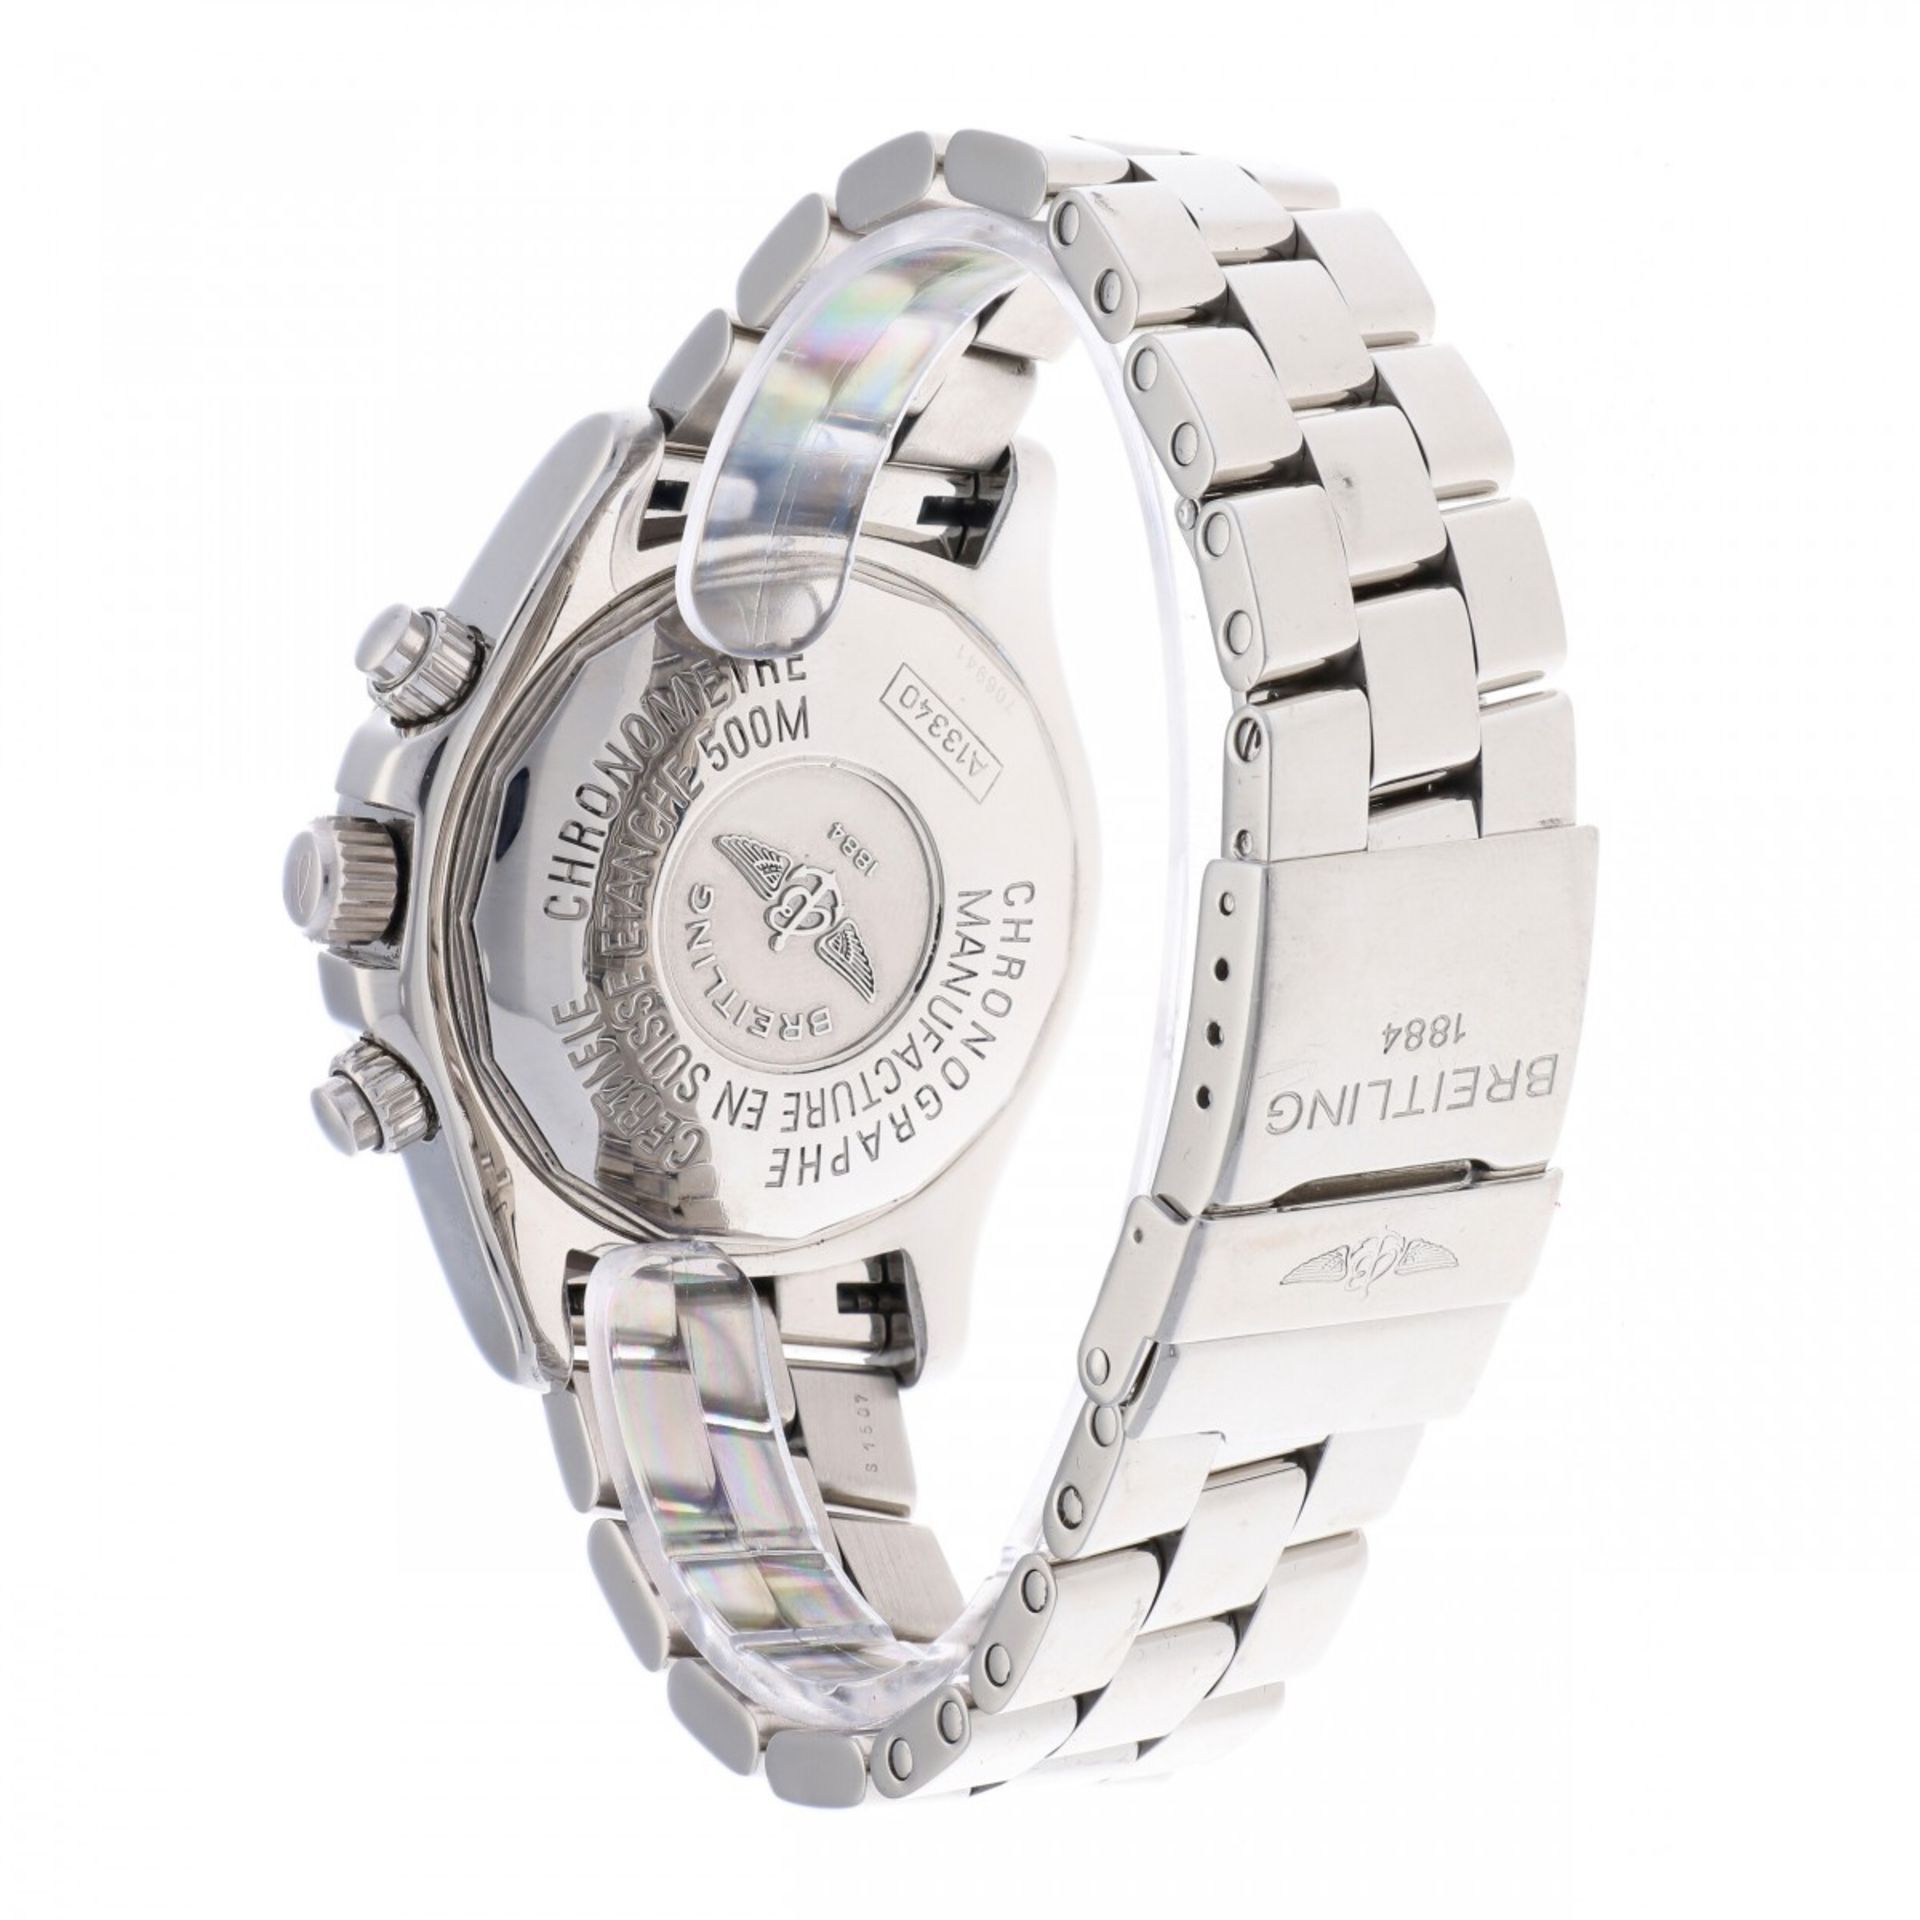 Breitling SuperOcean A13340 - Men's watch - ca. 2005 - Image 3 of 5